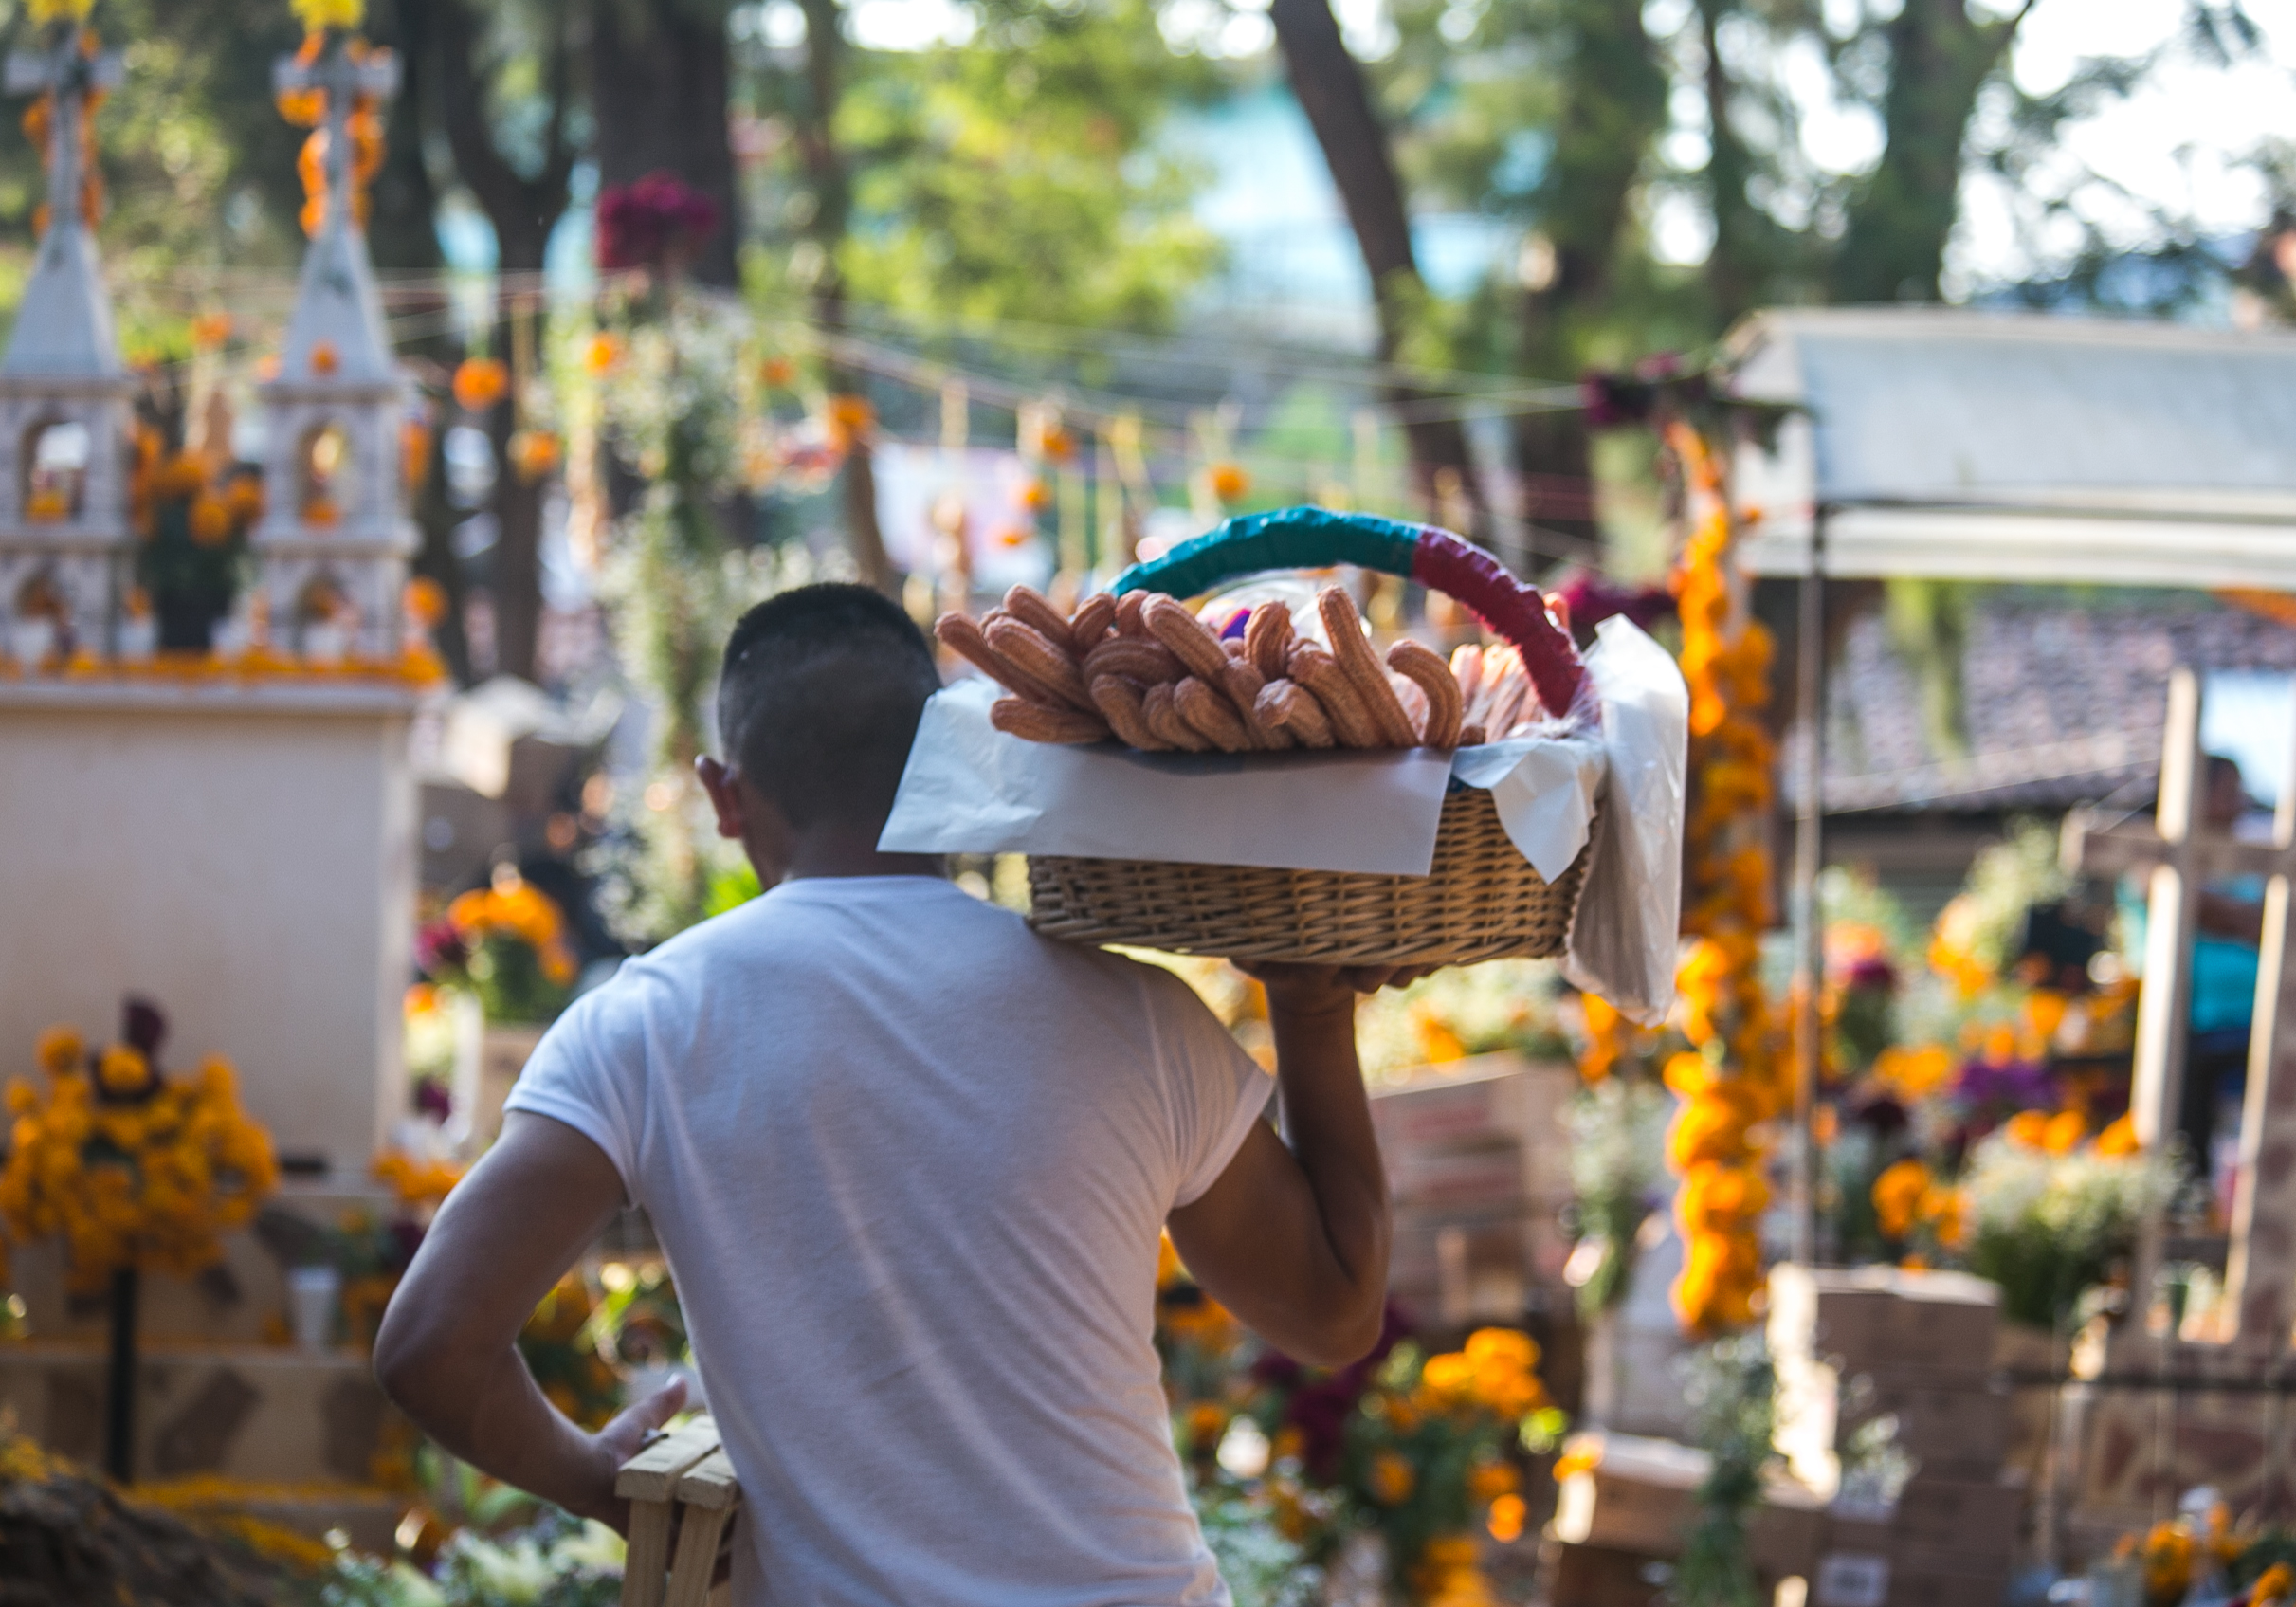  11/1/17 - A vendor walks amidst the graves yelling, "Hot churros! I got churros!"  